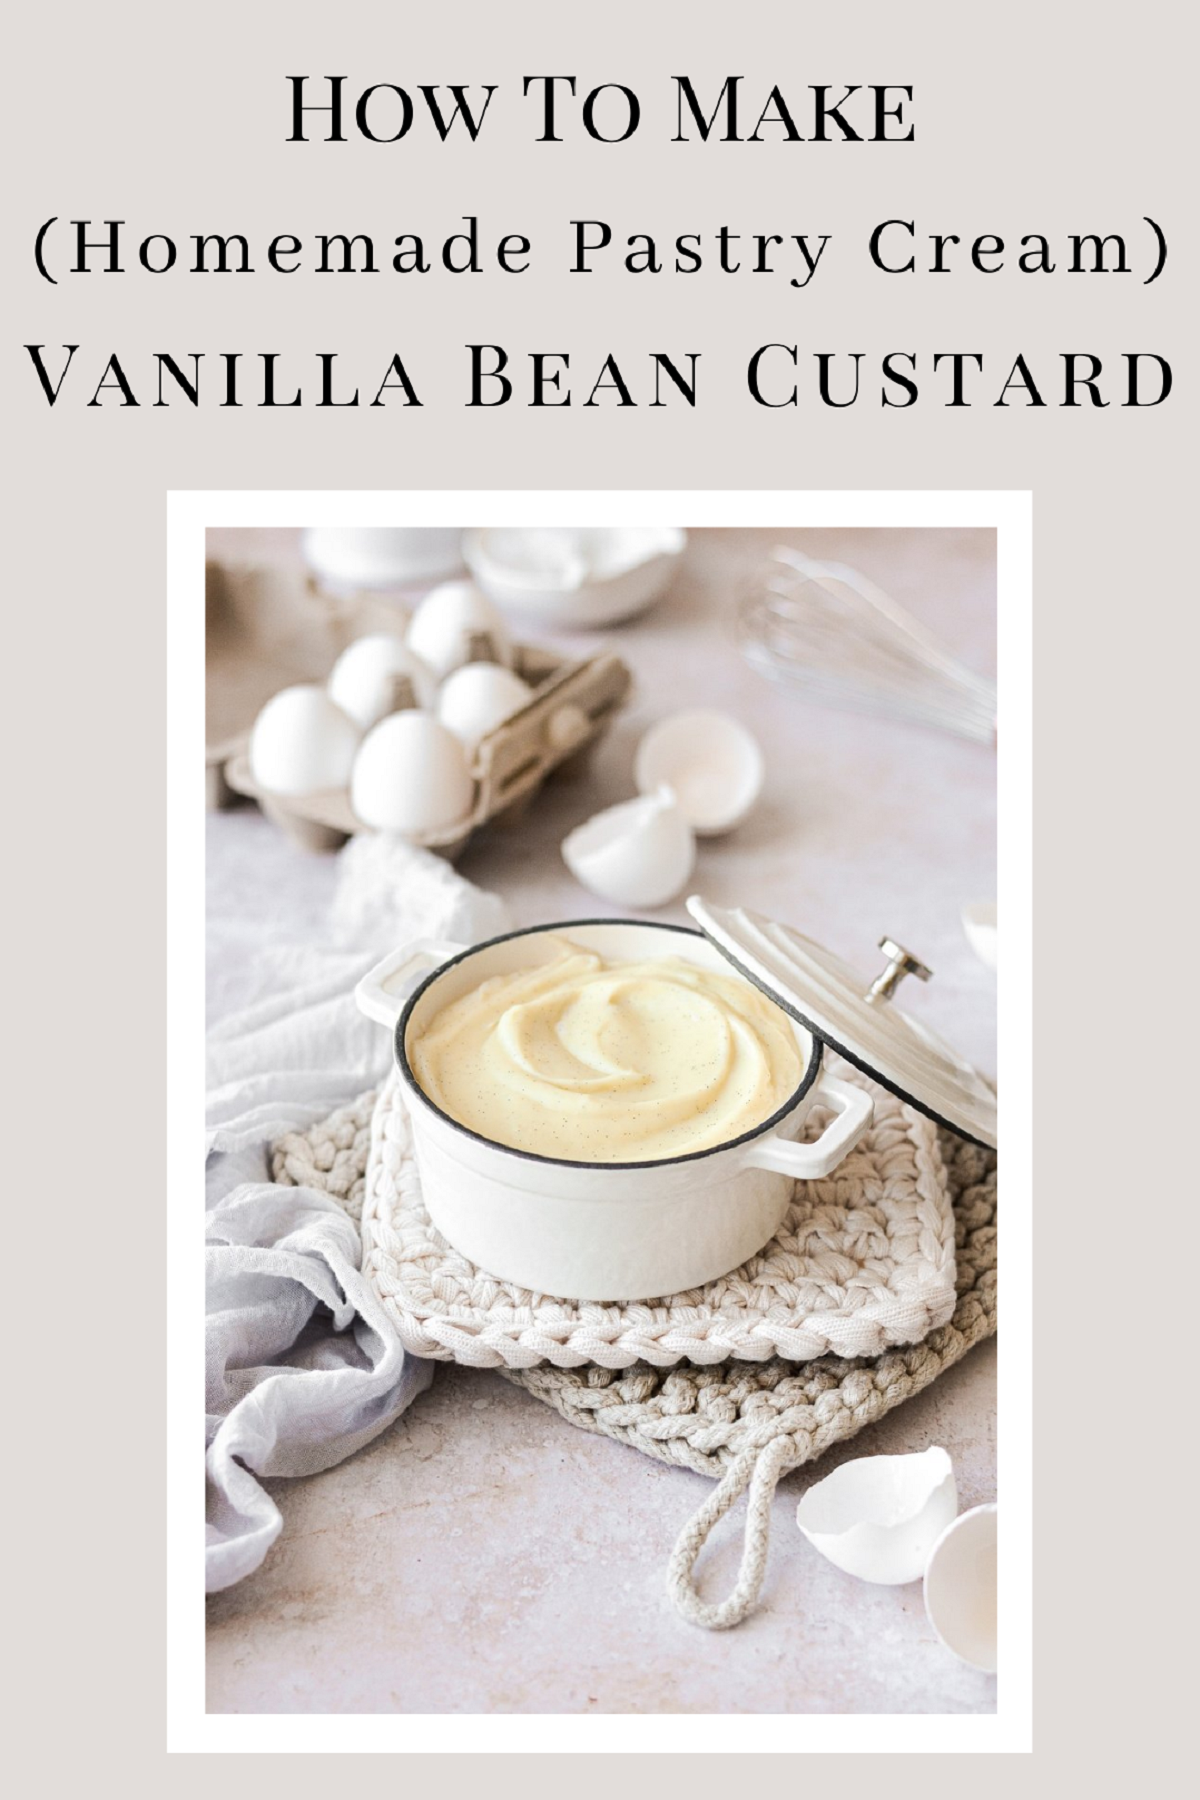 A graphic for how to make vanilla bean custard.